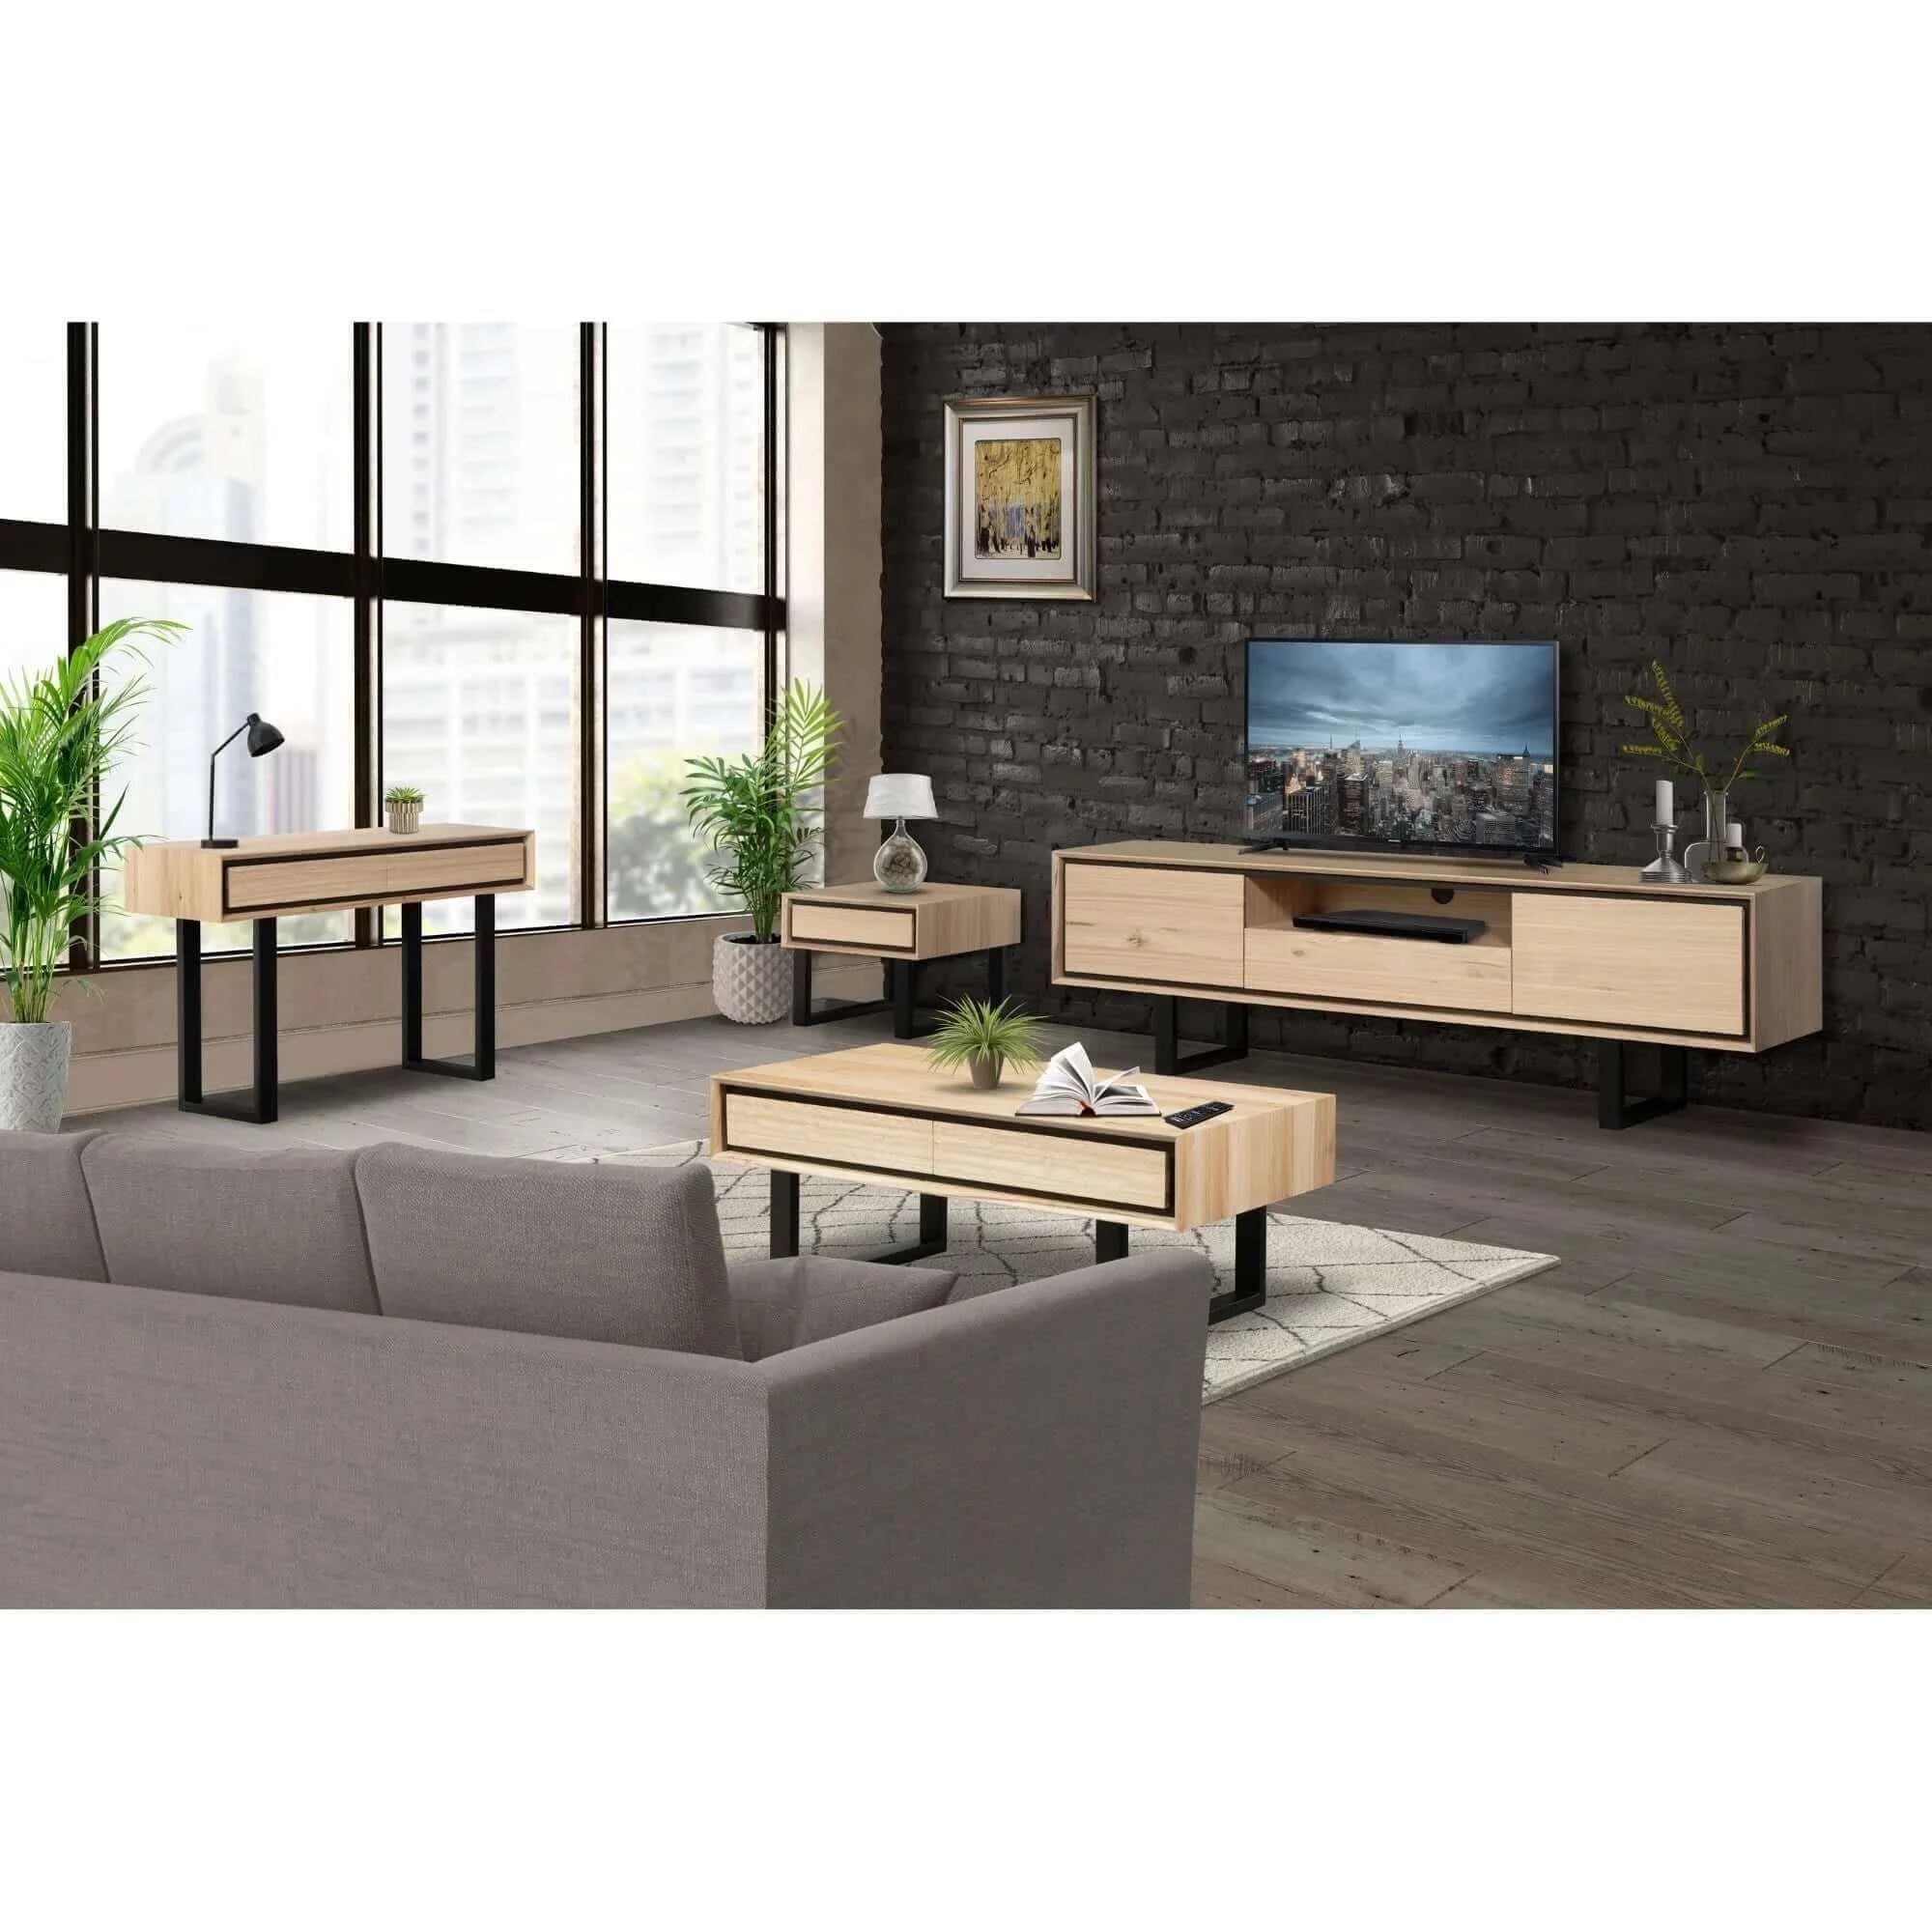 Buy Aconite ETU Entertainment TV Unit 210cm Solid Messmate Timber Wood-Upinteriors